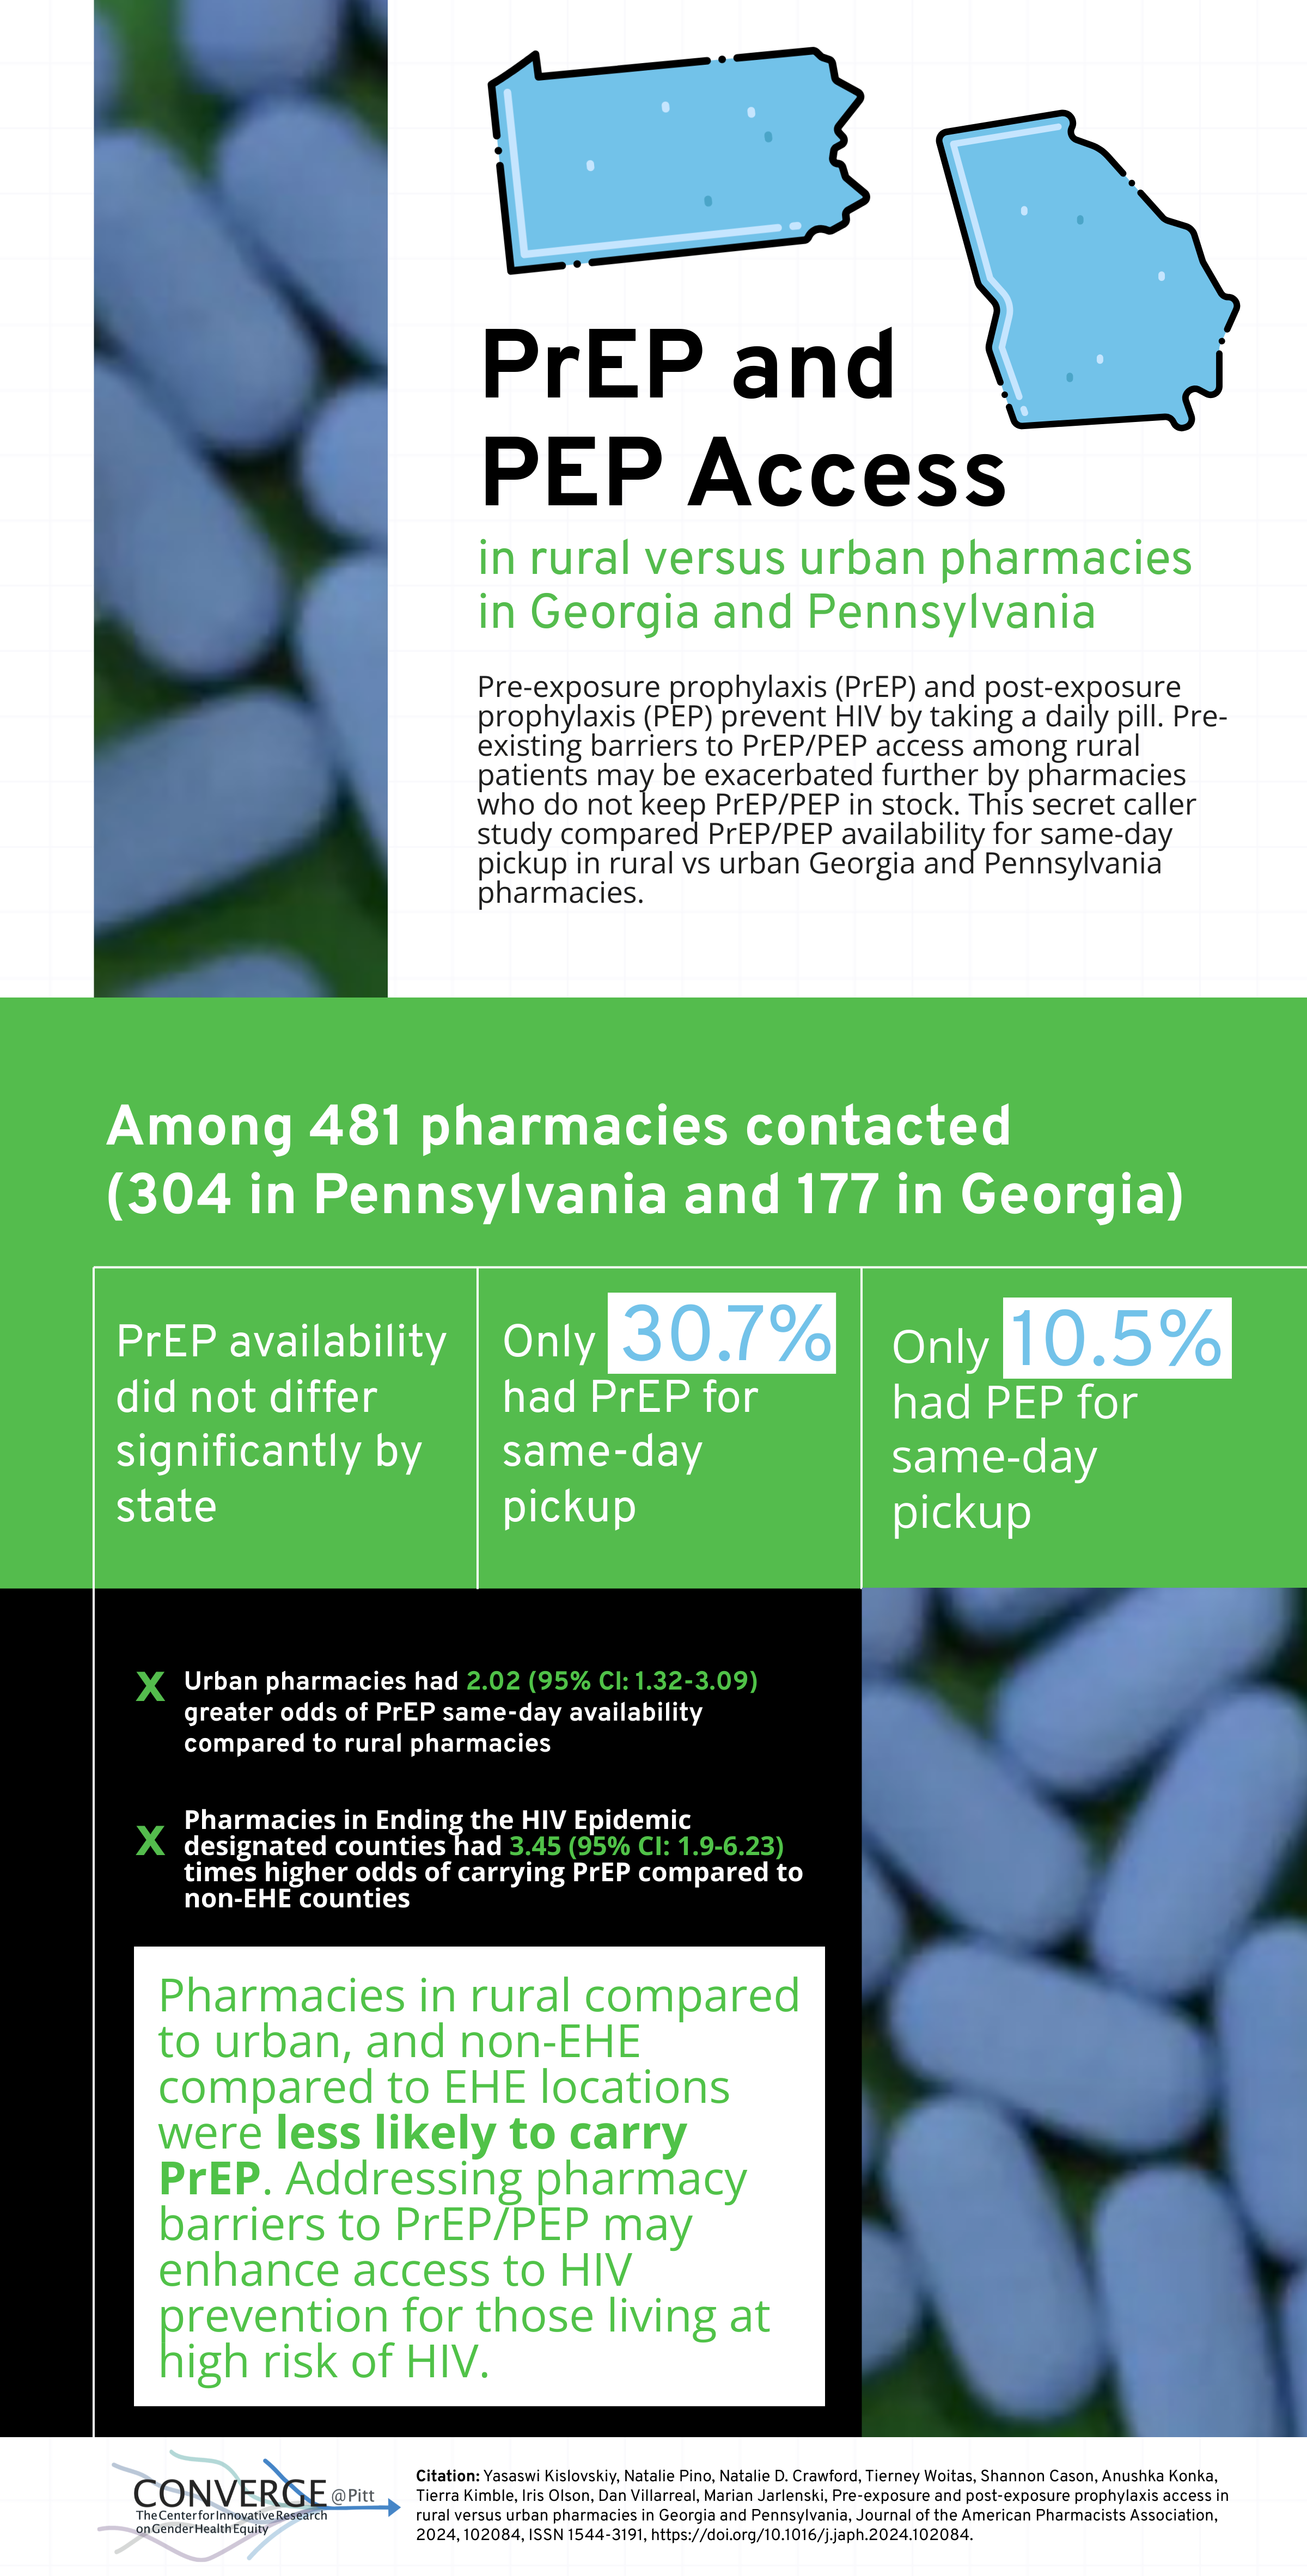 Pre-exposure and post-exposure prophylaxis access in rural versus urban pharmacies in Georgia and Pennsylvania